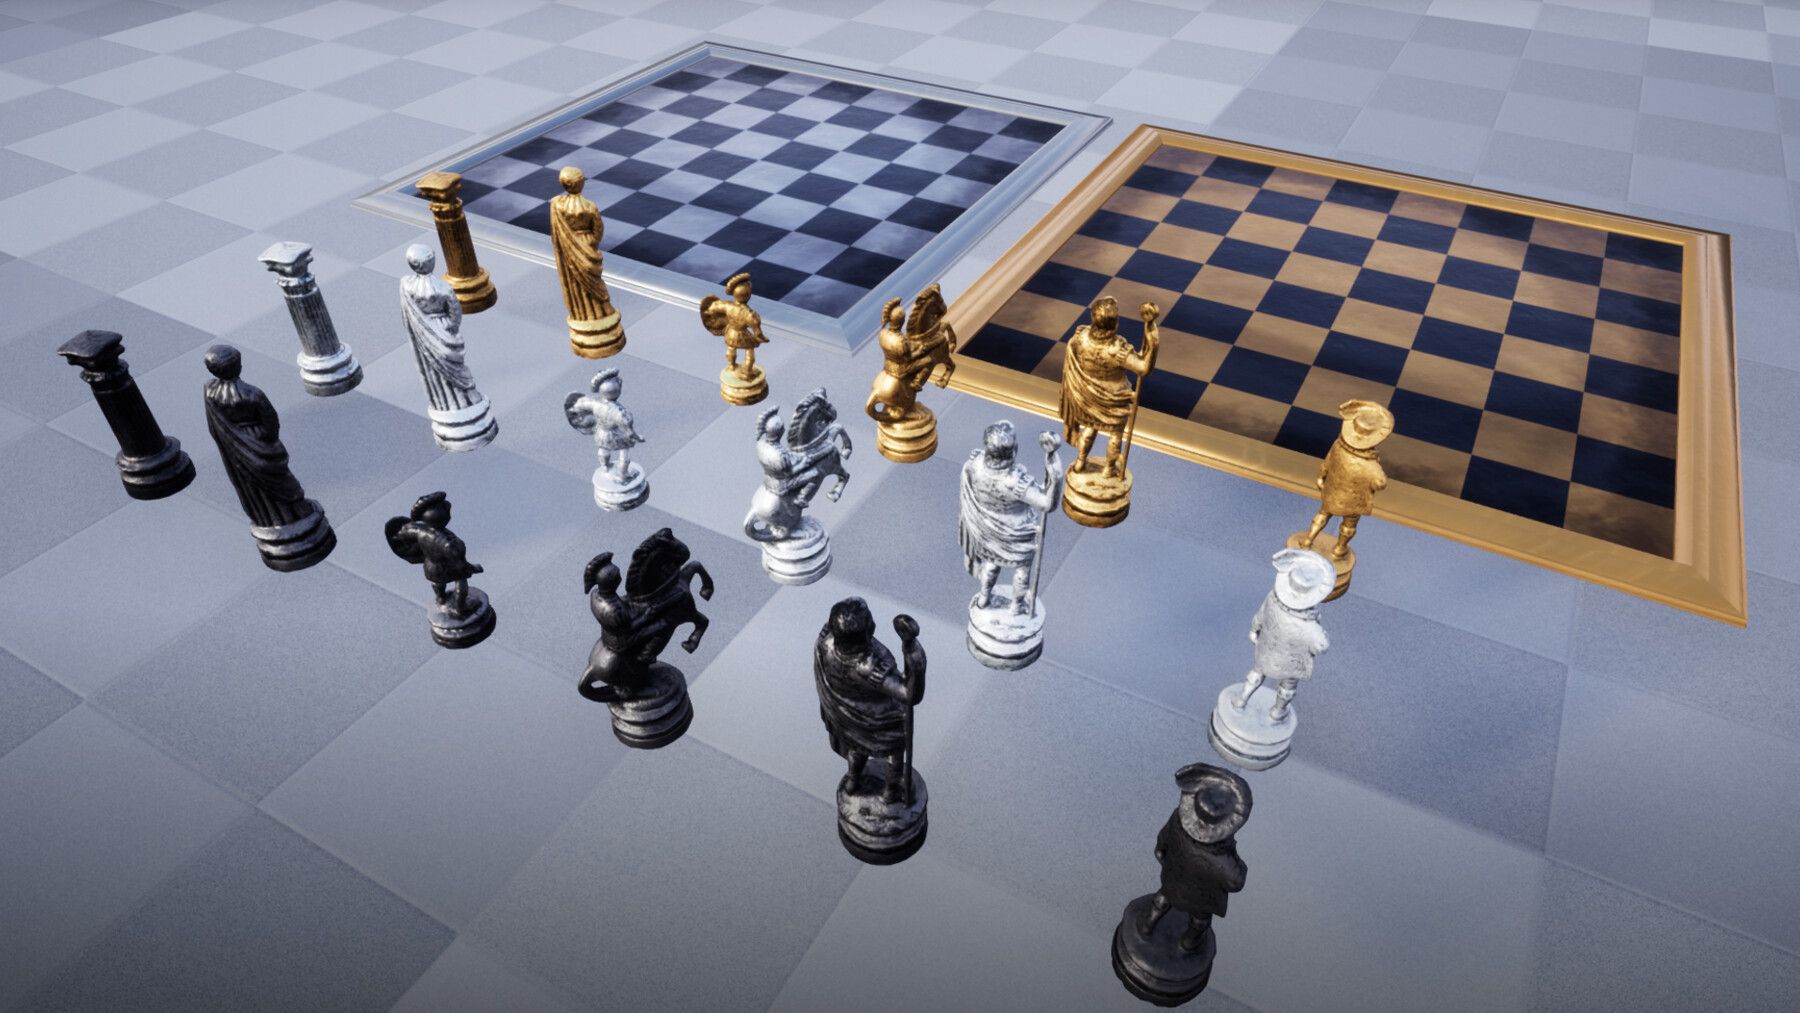 Chess Engine by Josh  GameMaker: Marketplace